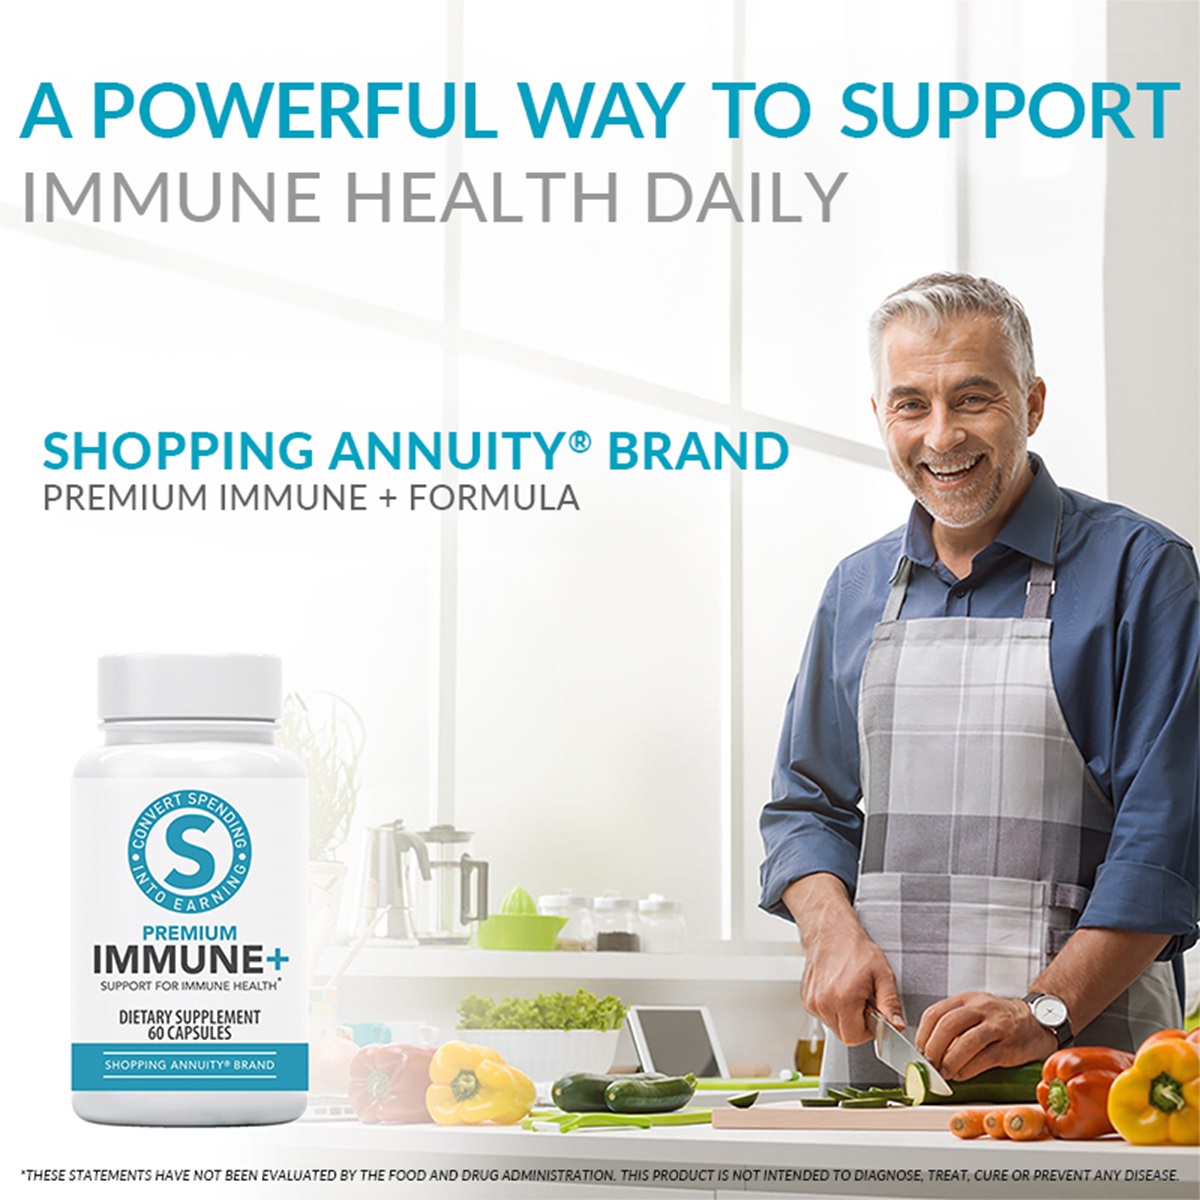 Why Choose Shopping Annuity Brand Premium Immune + Formula?